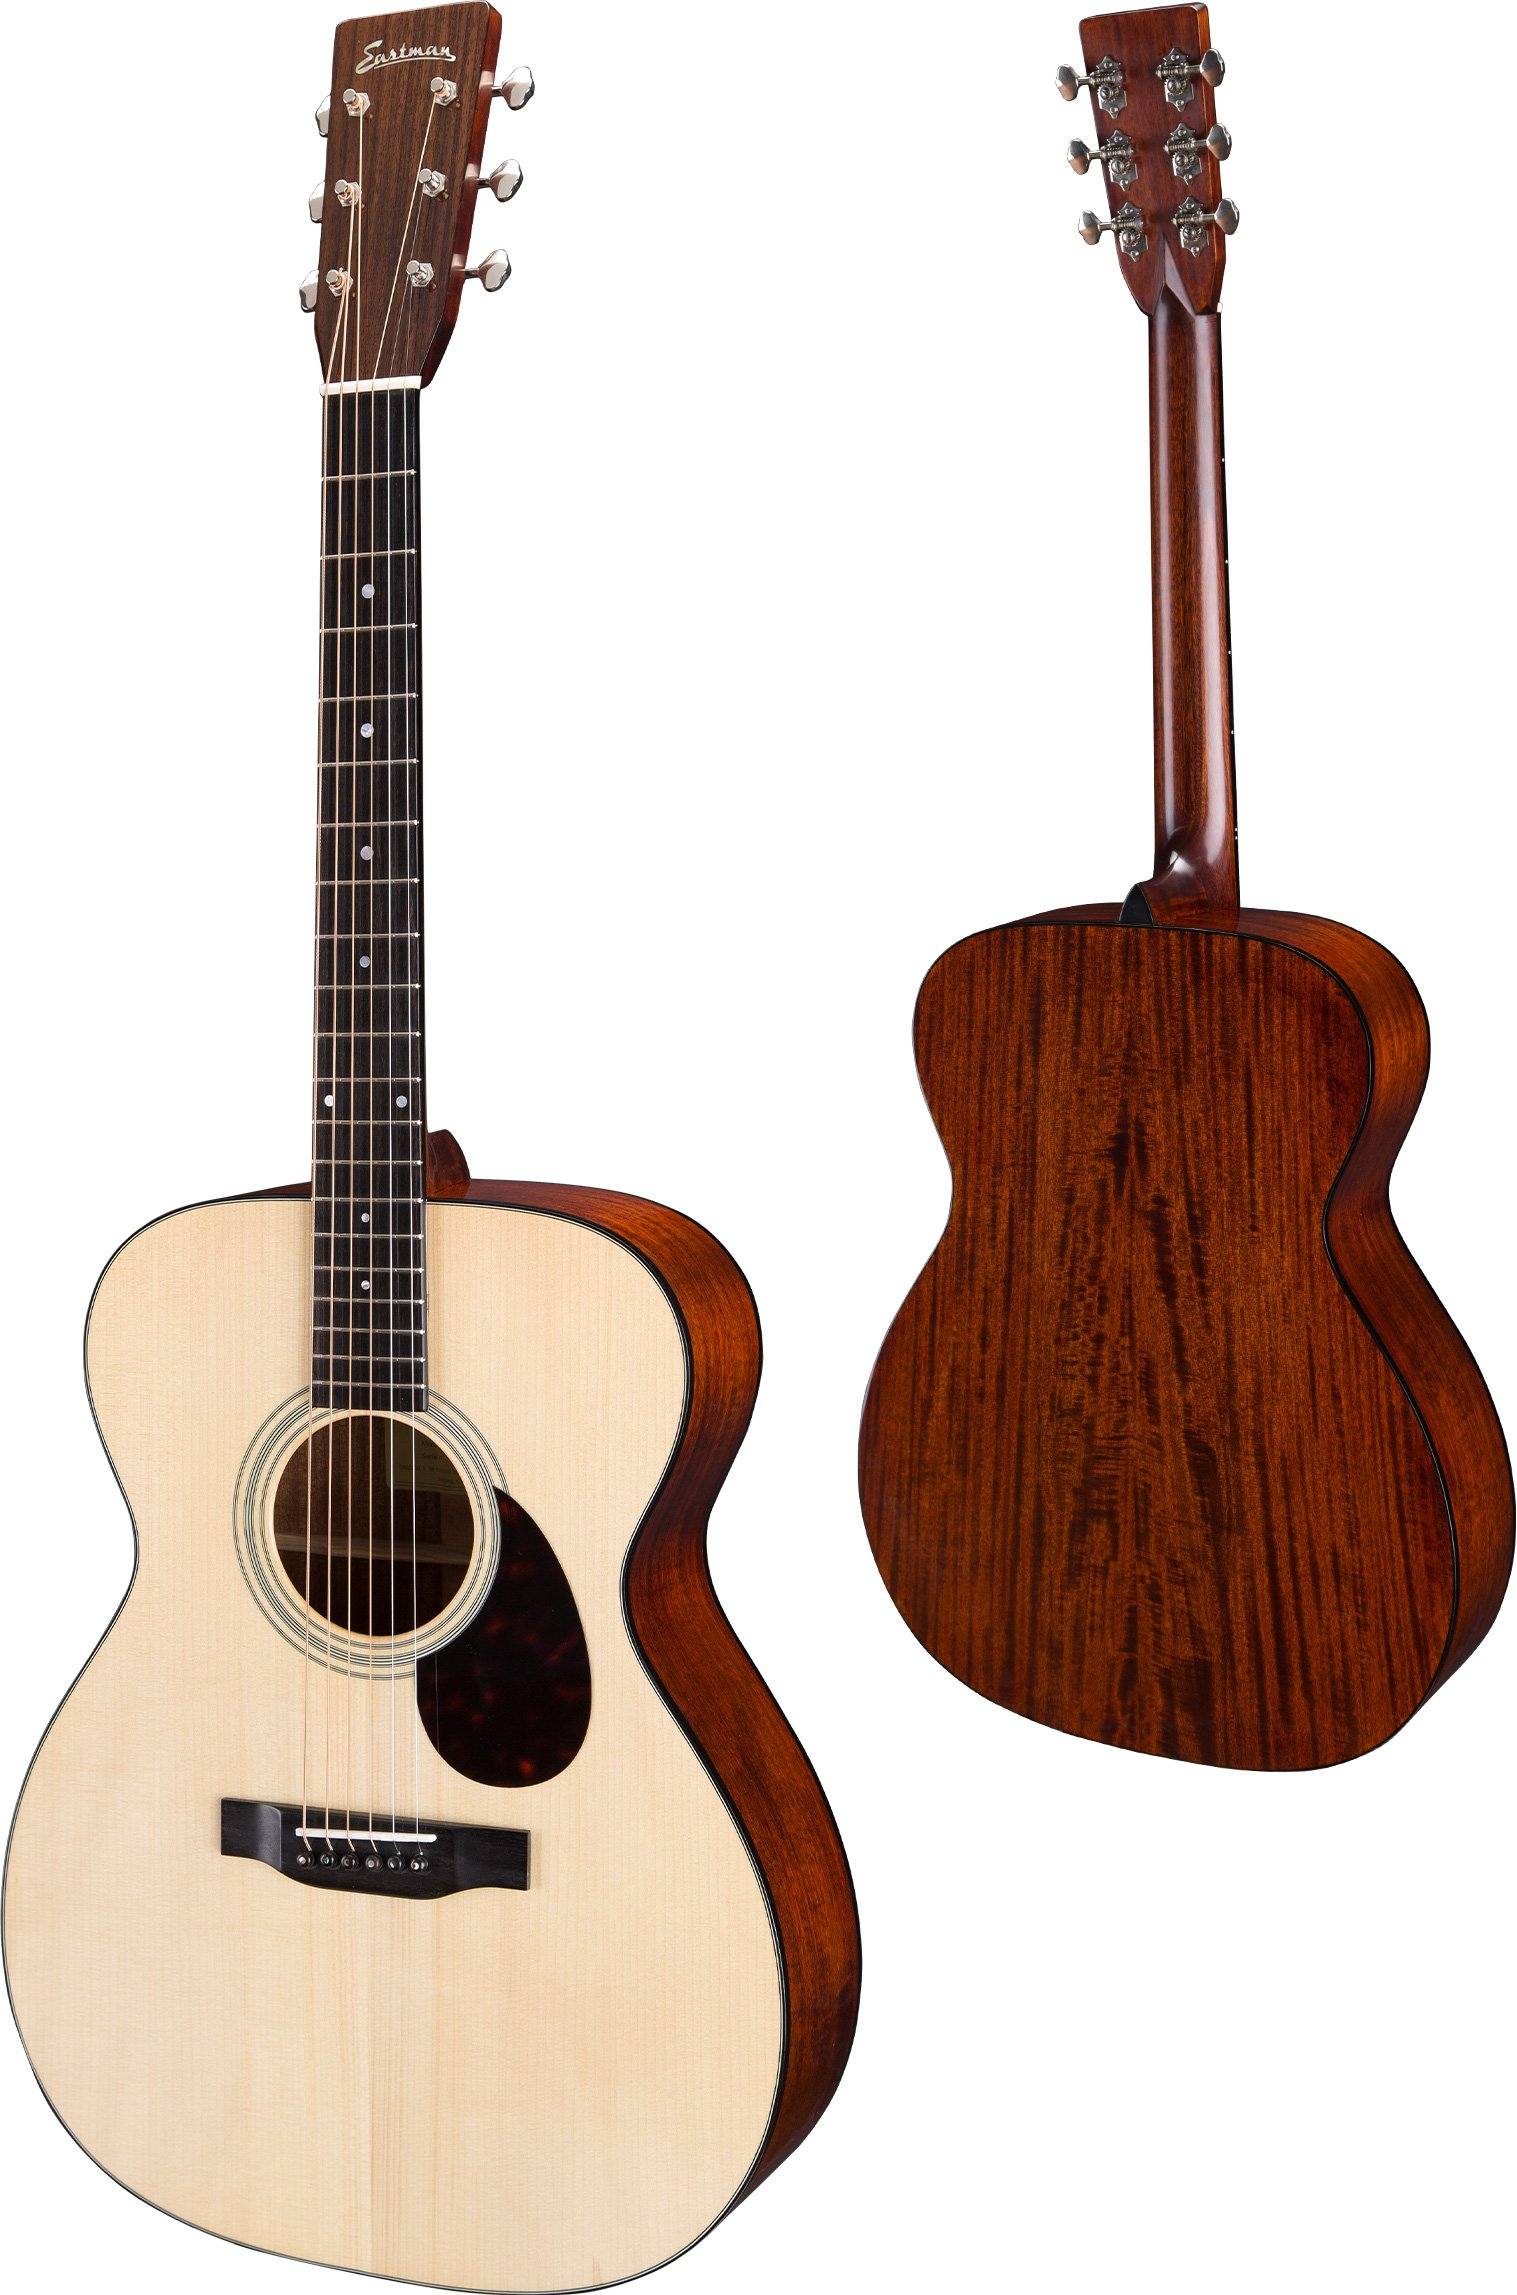 Eastman E10 OM Orchestra model, Acoustic Guitar for sale at Richards Guitars.